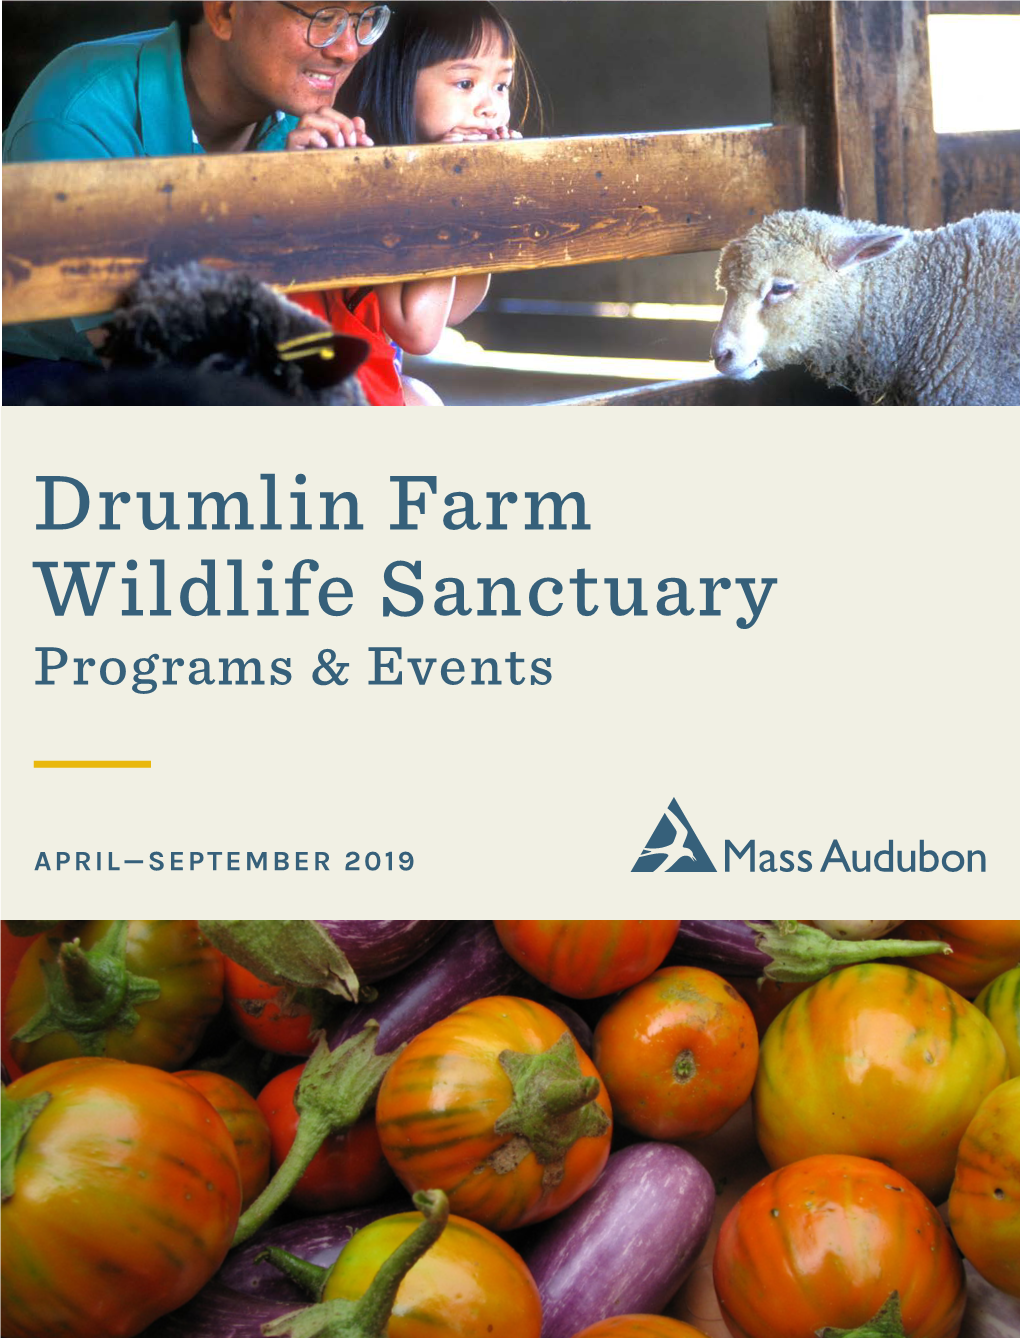 Drumlin Farm Wildlife Sanctuary Programs & Events